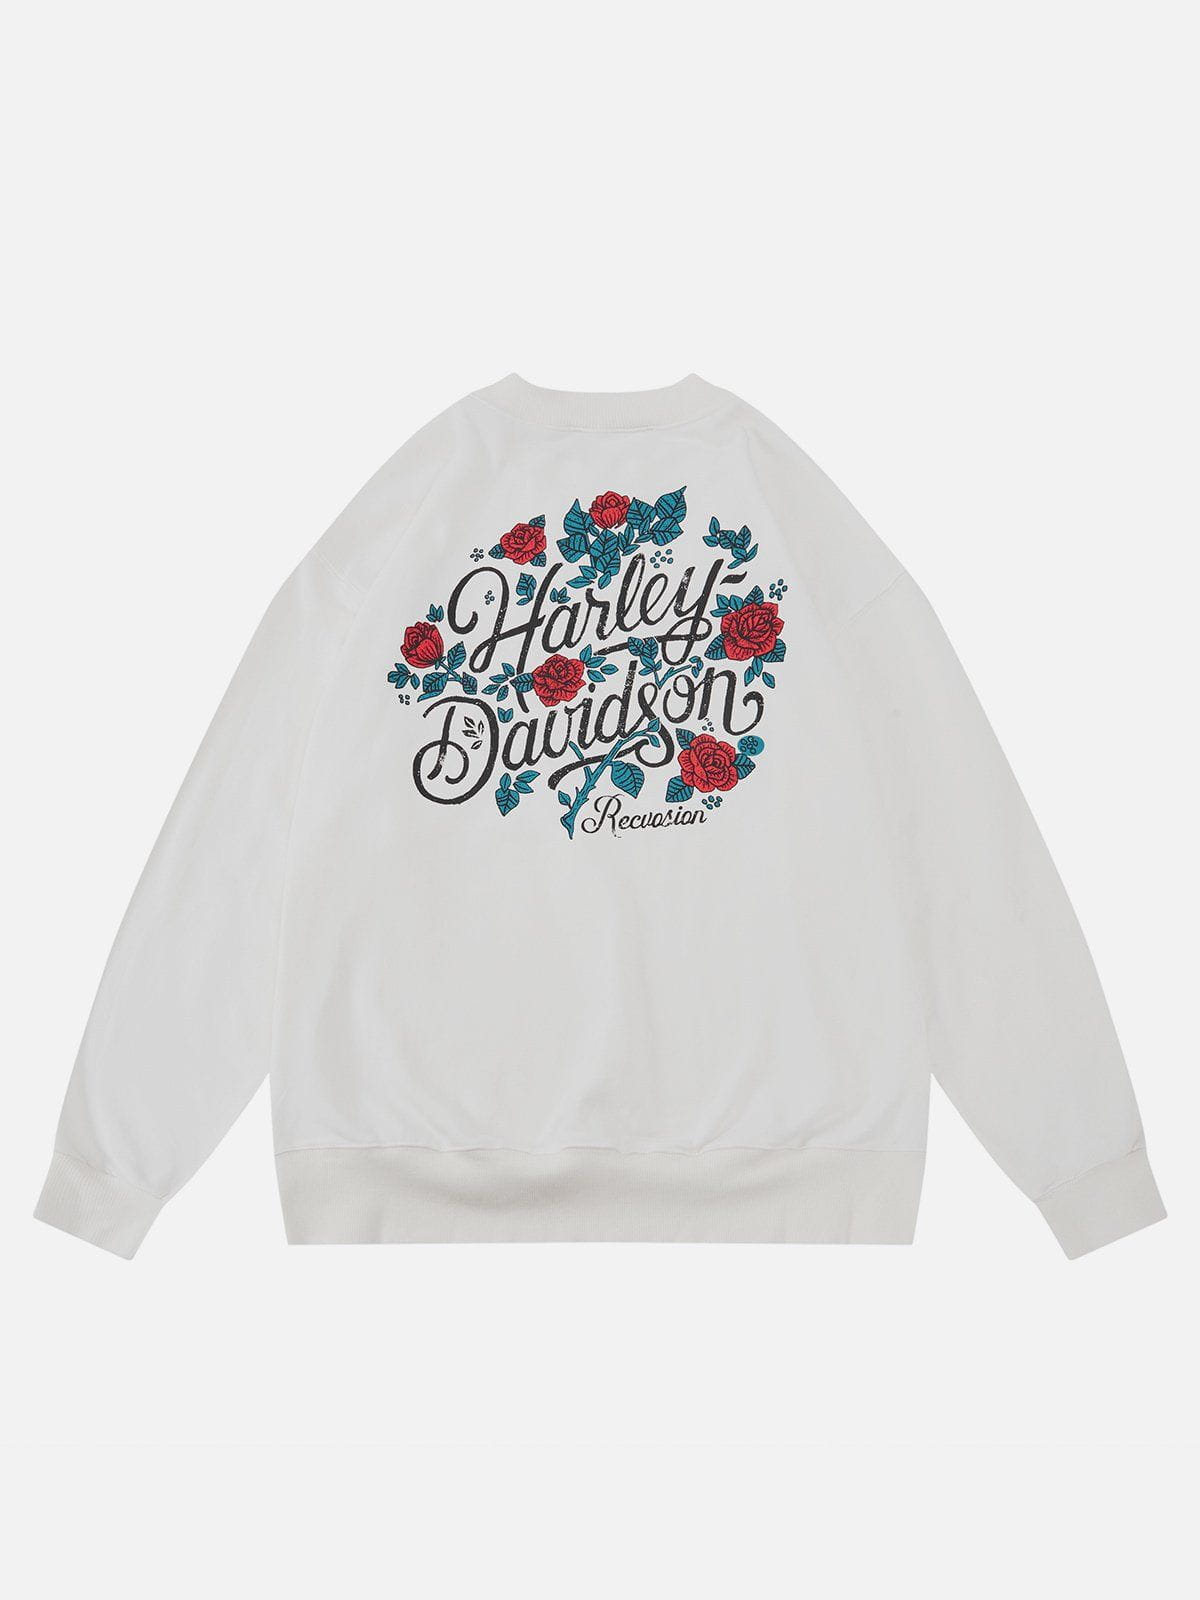 LUXENFY™ - Vintage "R" Print Sweatshirt luxenfy.com